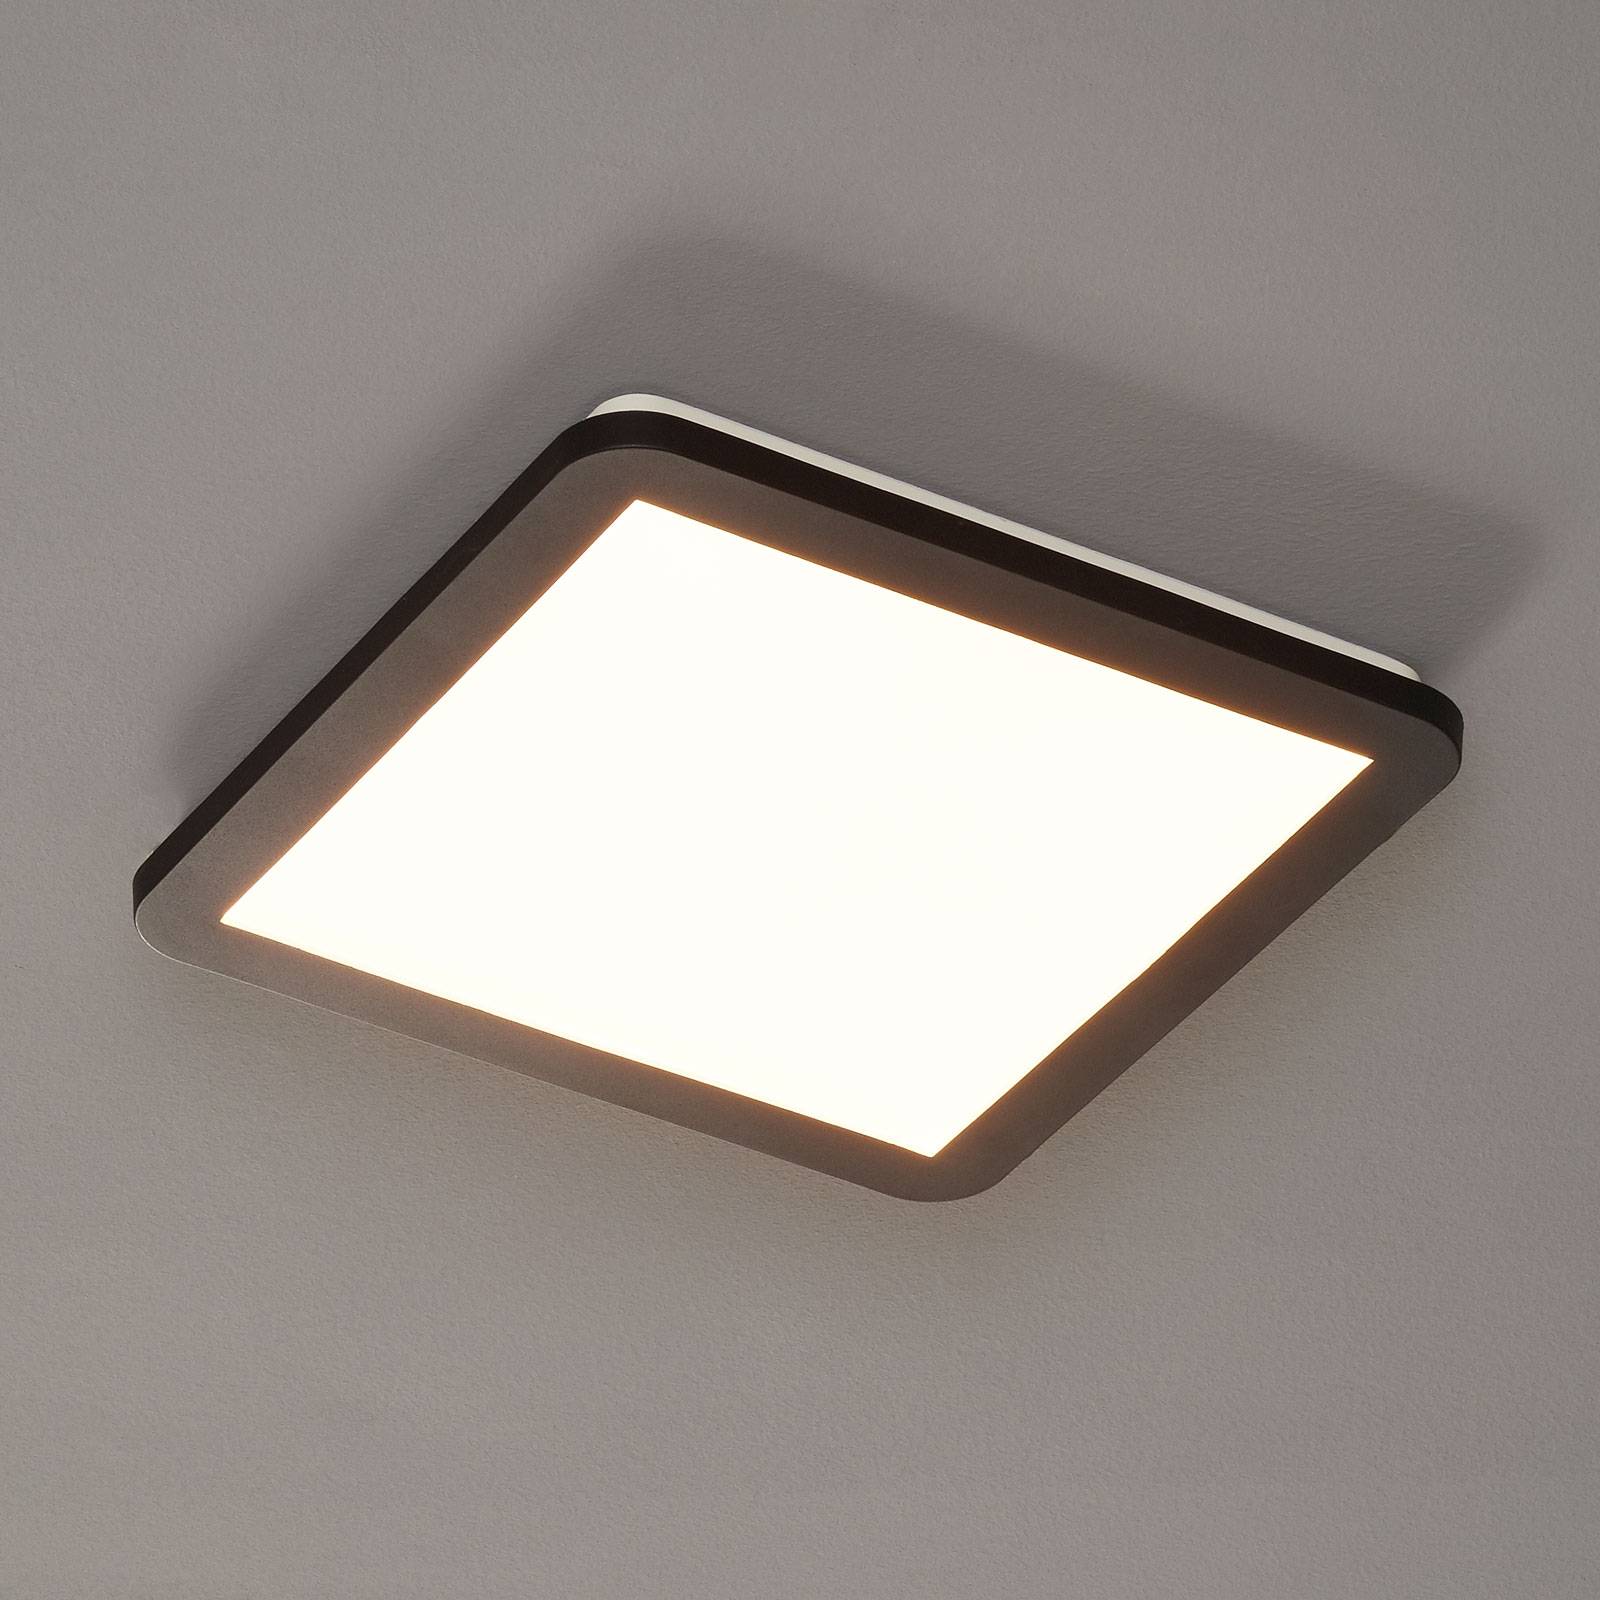 Lampa sufitowa LED Camillus, kwadratowa, 30 cm